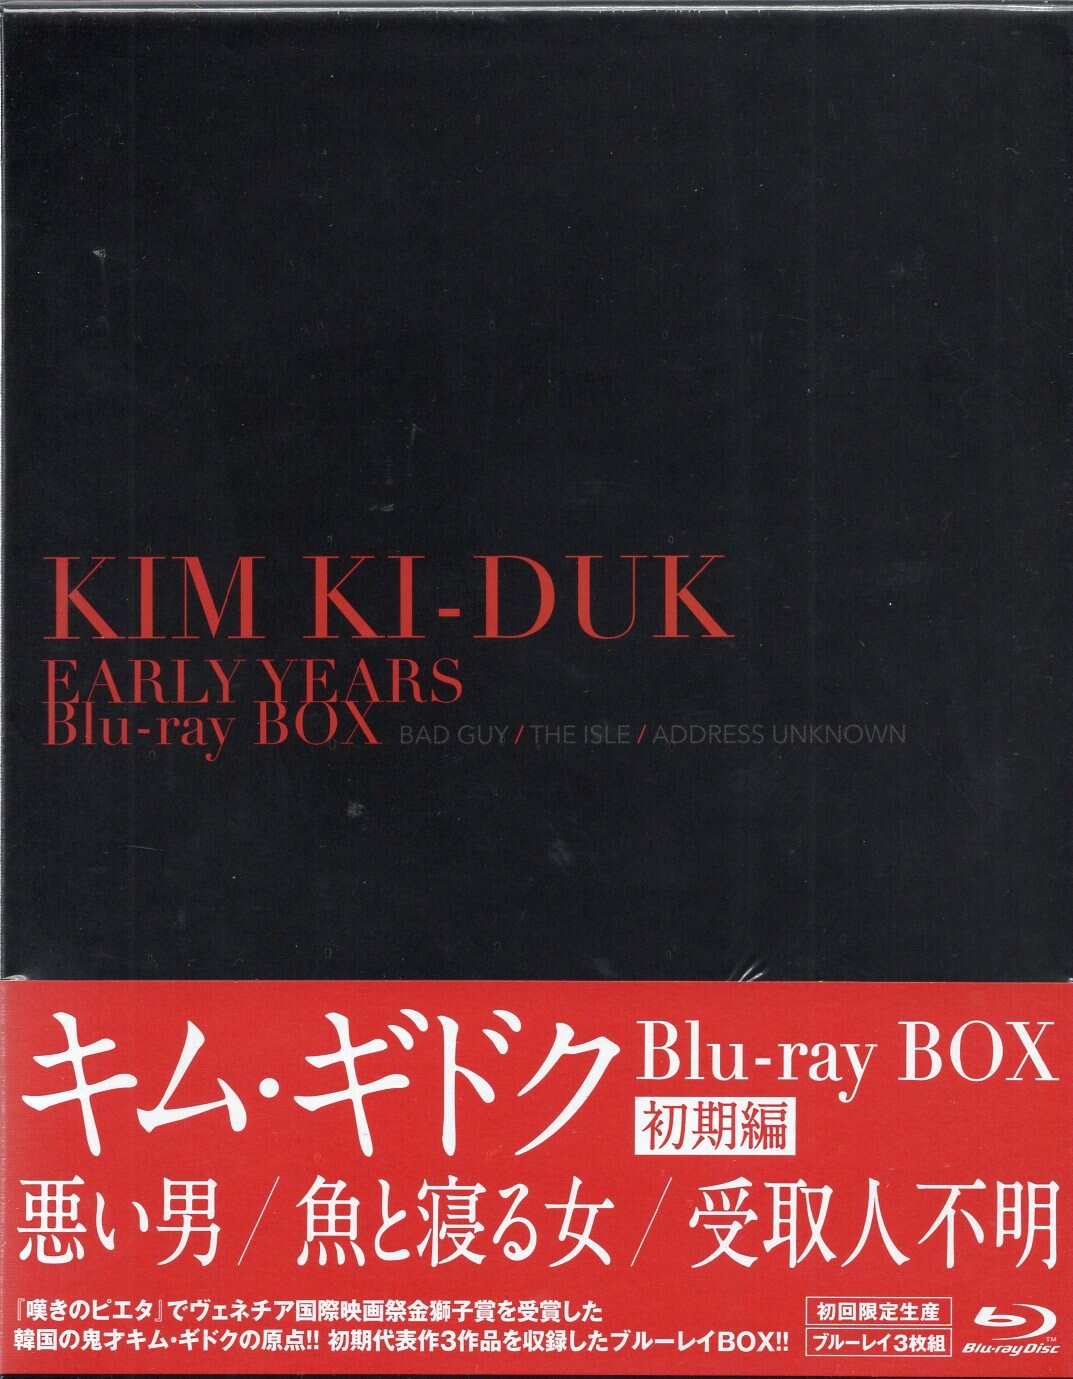 initial　King　Blu-ray　Unopened　Blu-ray　Online　ed　Records　Movie　BOX　Mandarake　Kim・Ki　Shop　Duk　※